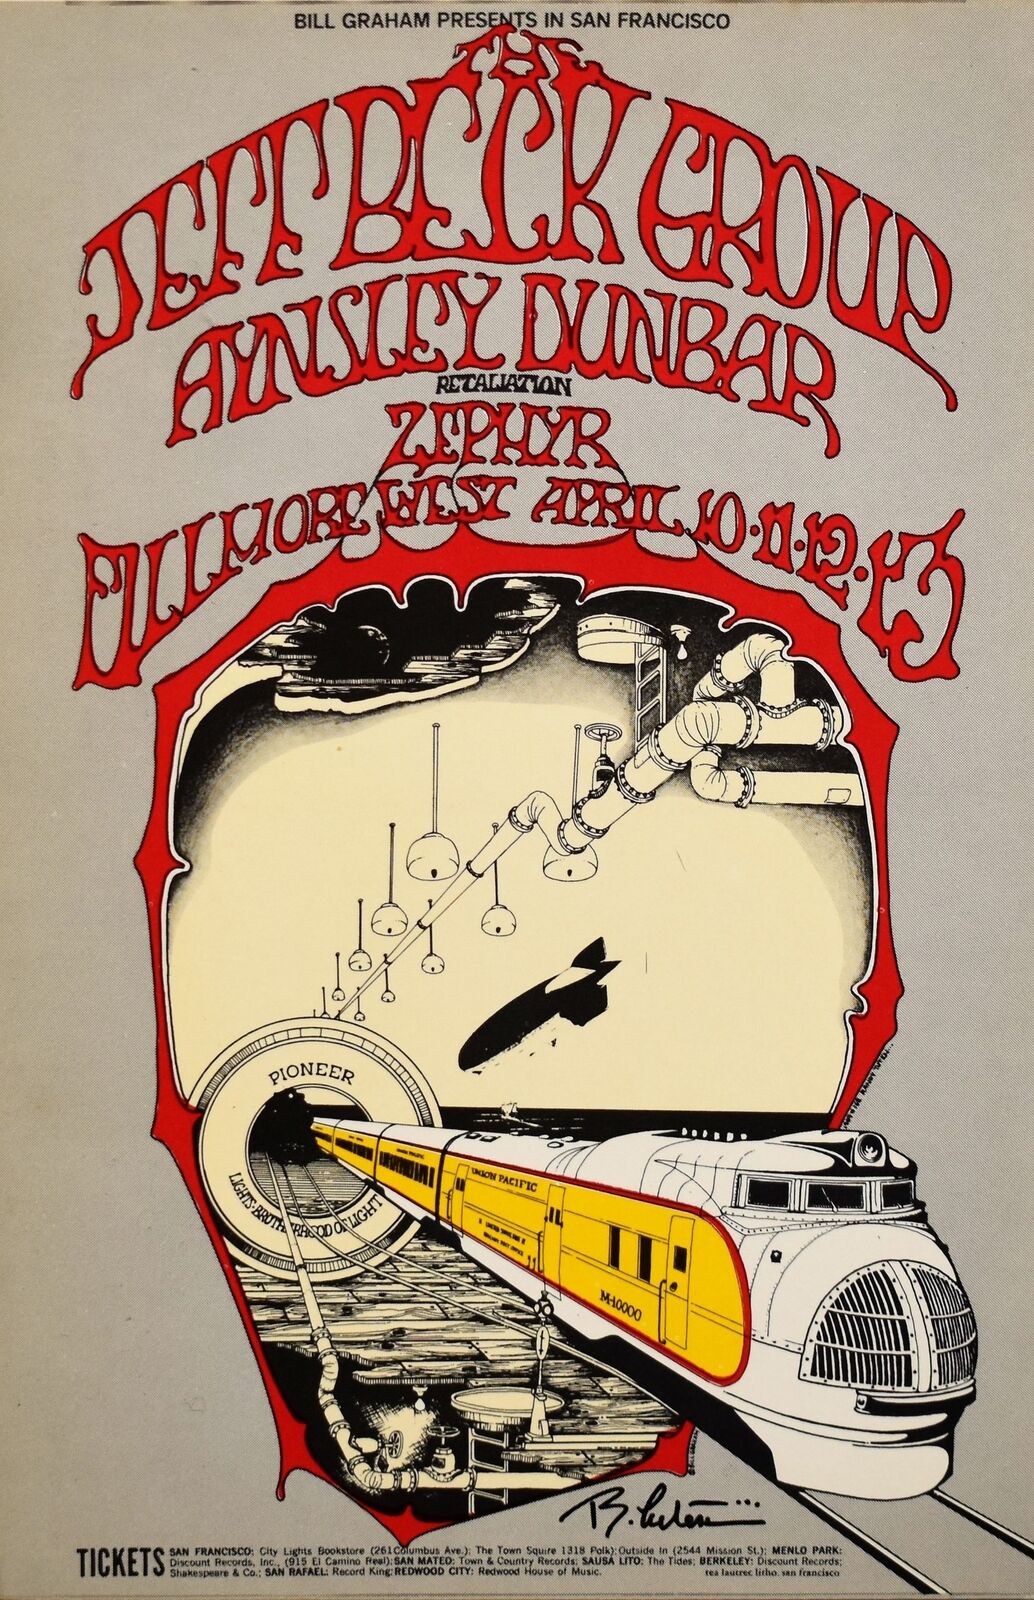 Jeff Beck Handbill 1969 Bg168 Signed By Randy Tuten